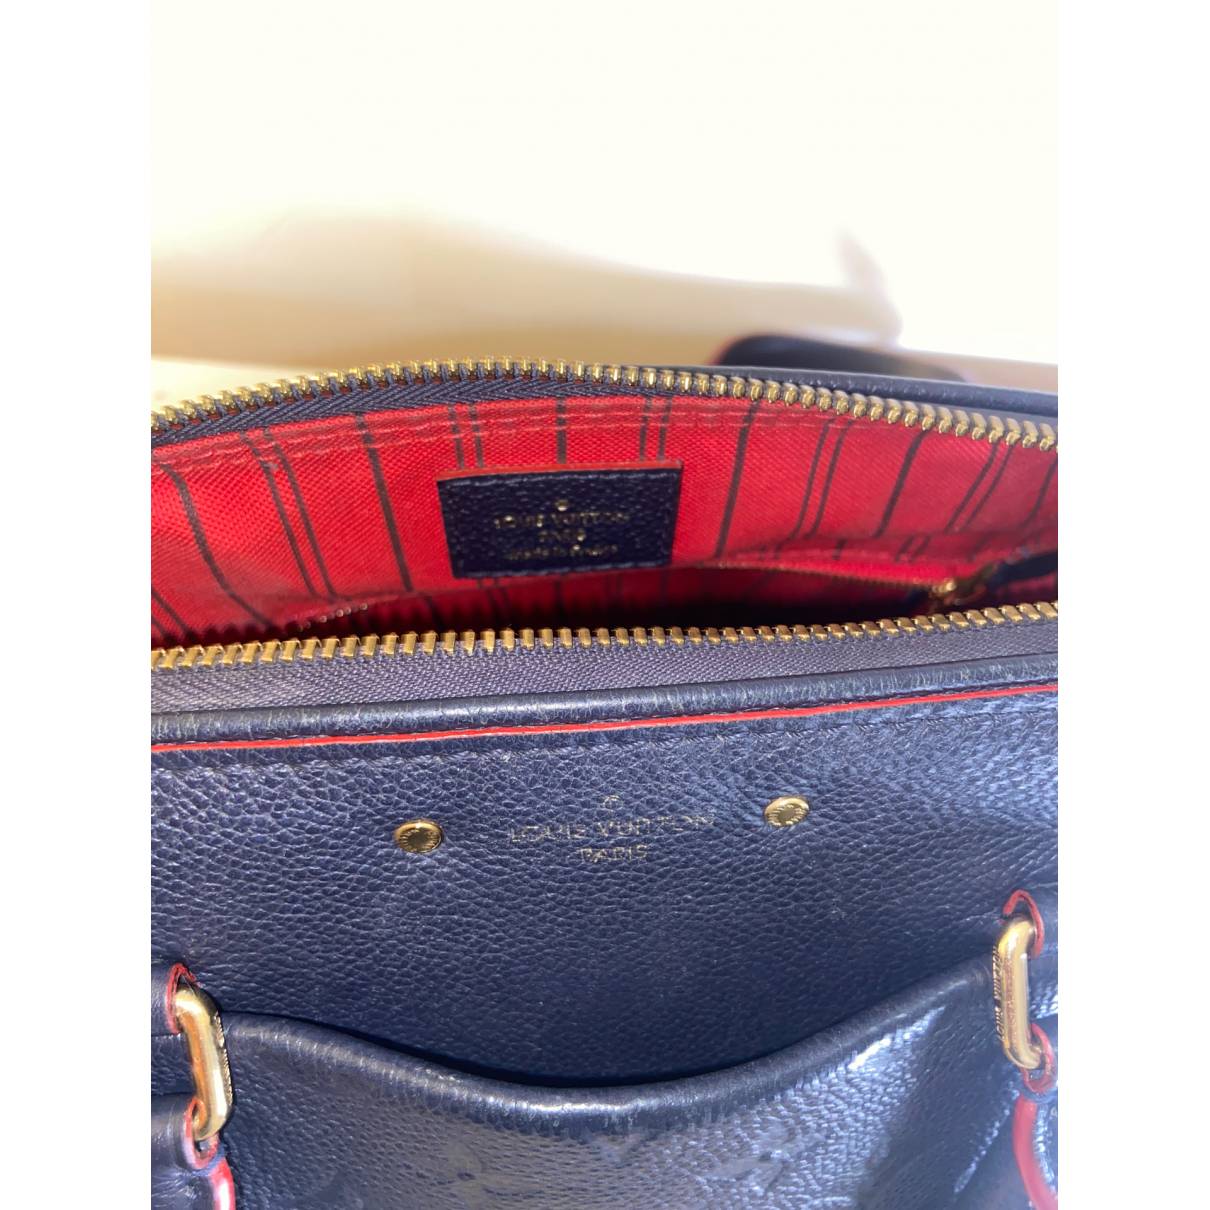 Louis Vuitton - Authenticated Speedy Bandoulière Handbag - Leather Navy Plain for Women, Very Good Condition